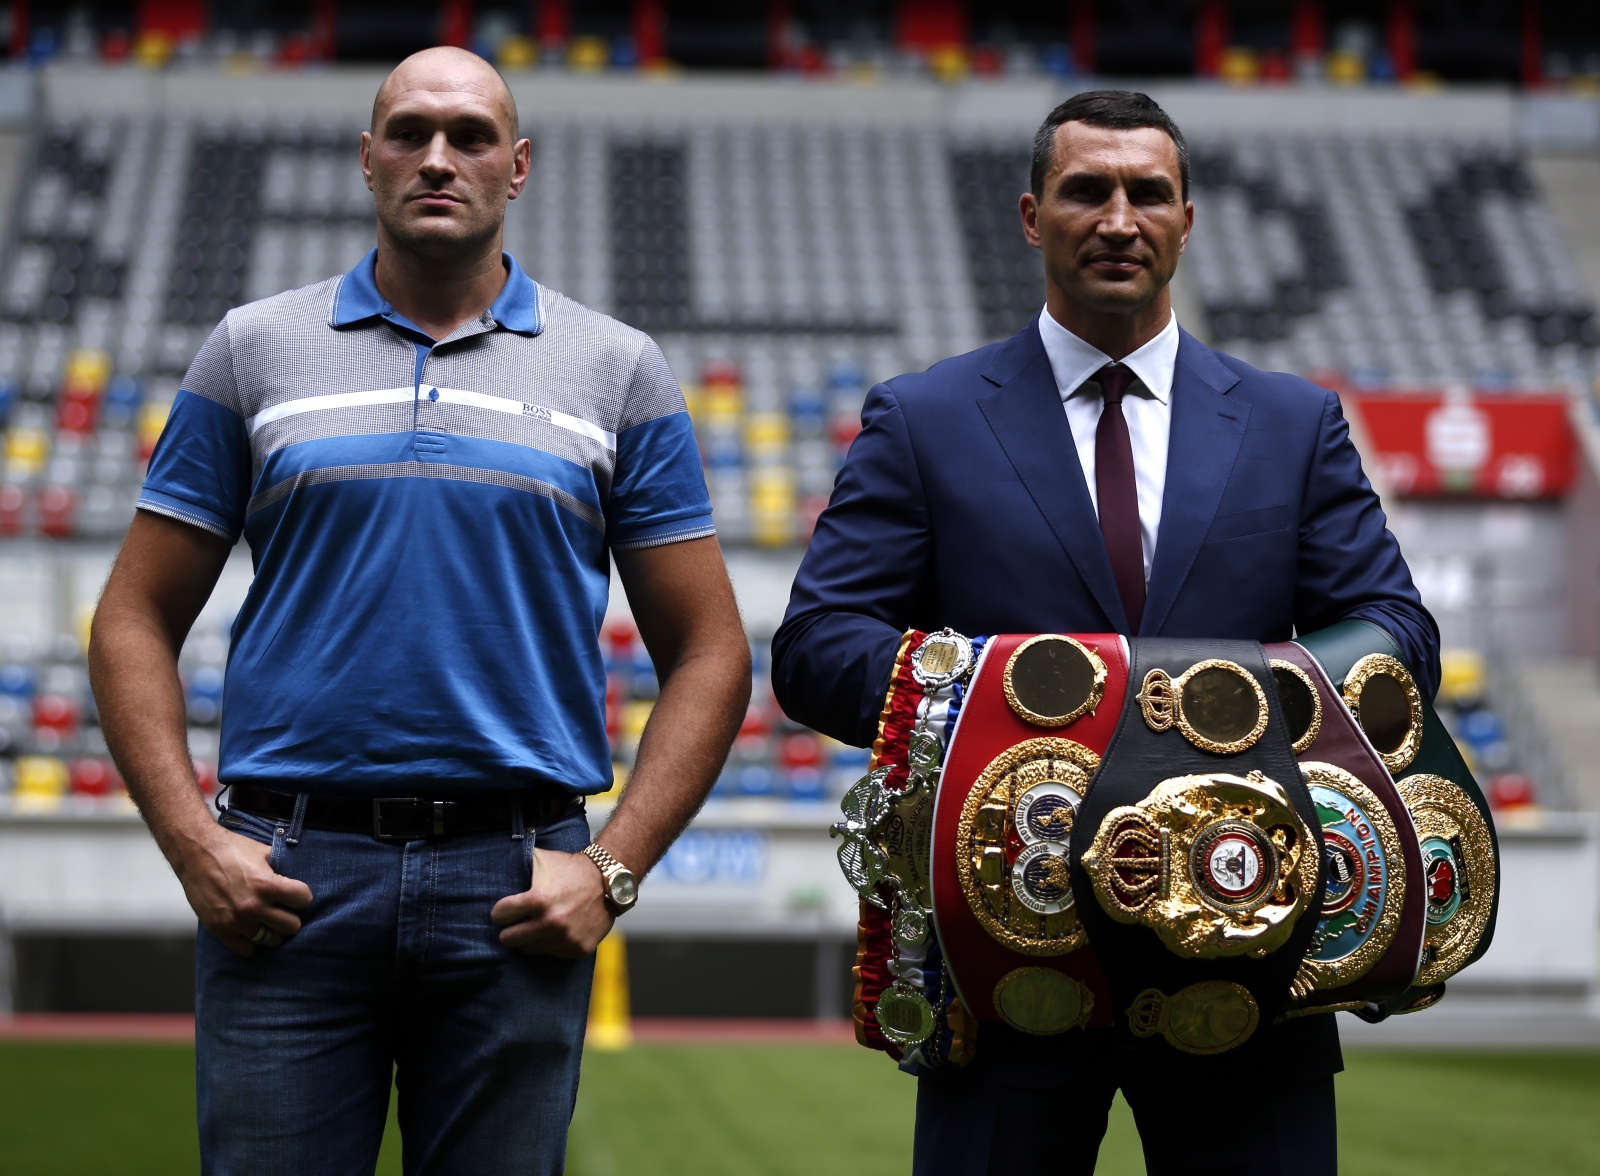 Wladimir Klitschko vs Tyson Fury heavyweight clash postponed after